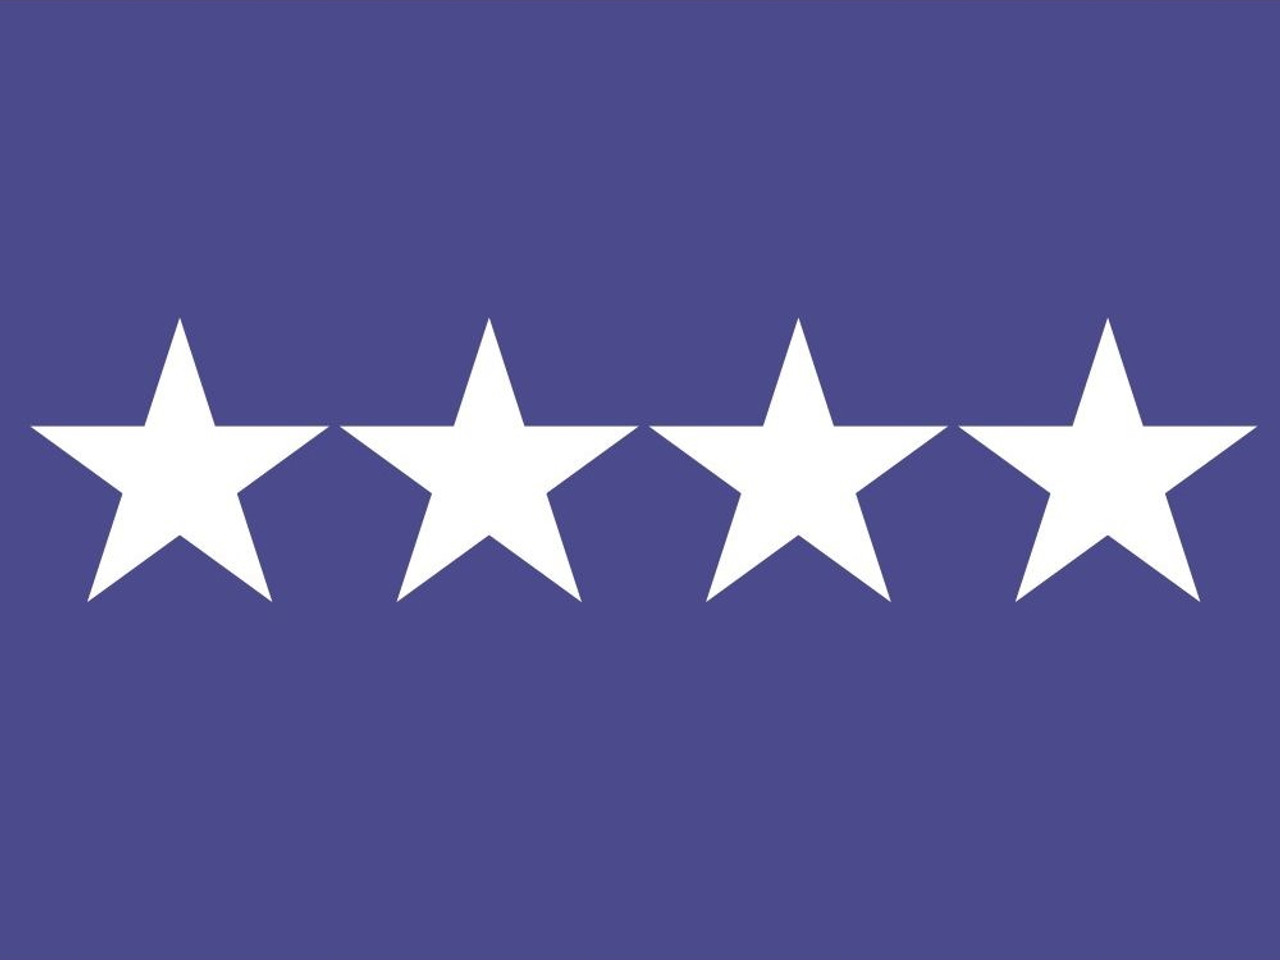 Air Force General Flag, 4 Star Nylon Applique with Pole Hem, Size 3' X 4', GAF4-103043